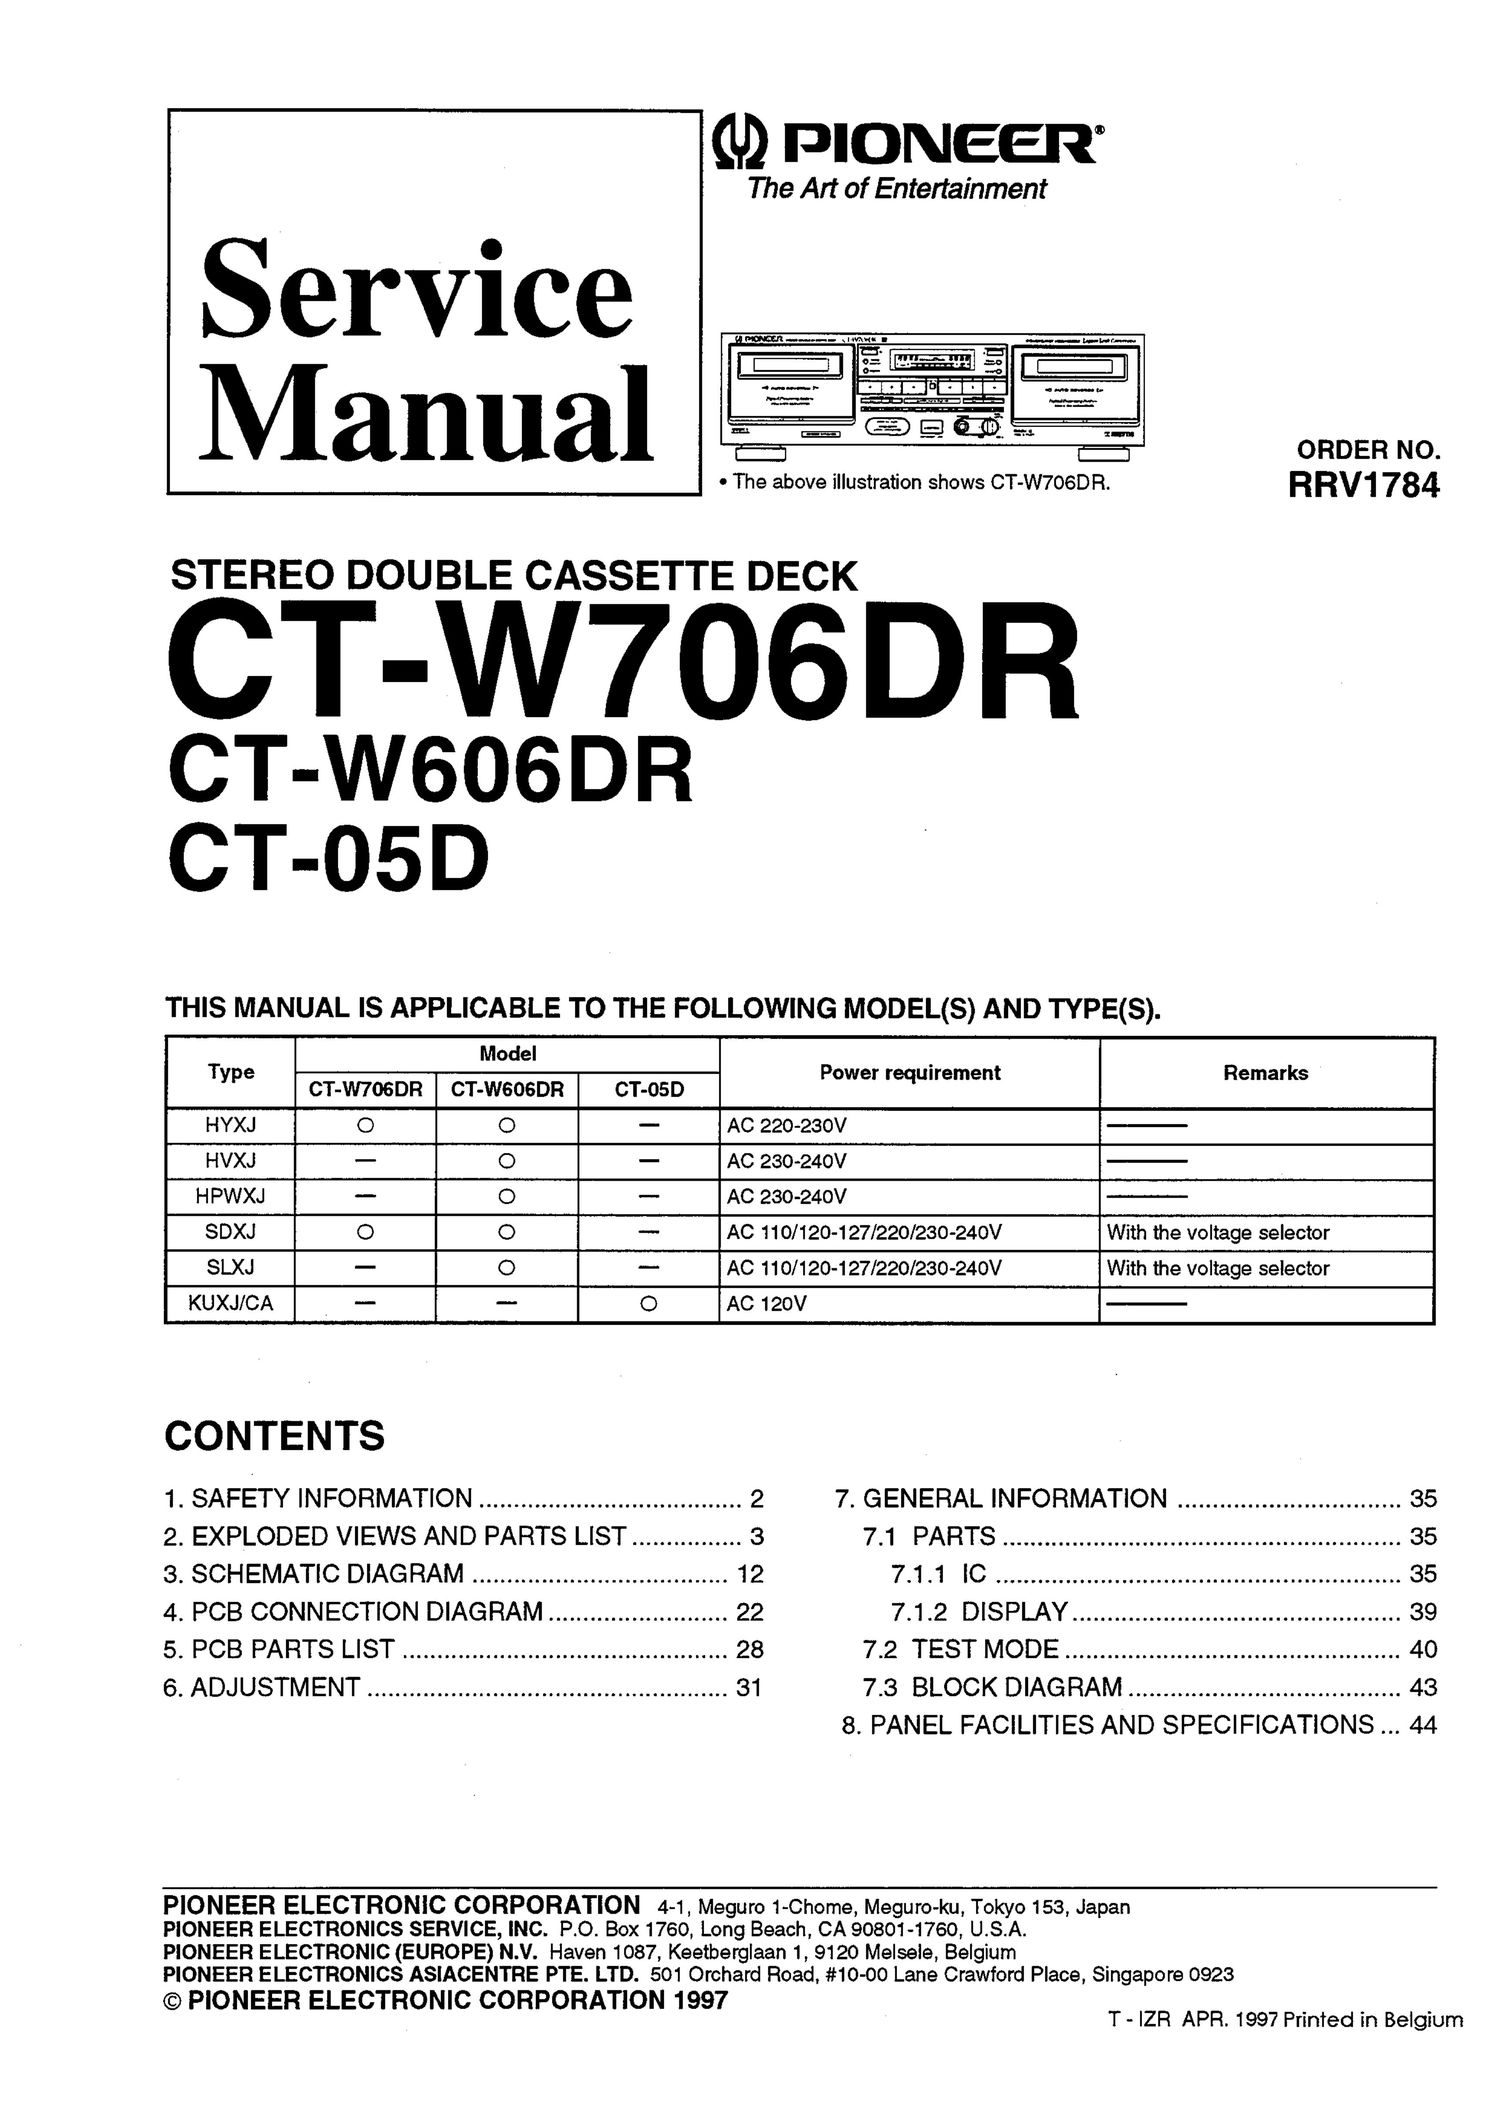 pioneer ct 05 d service manual